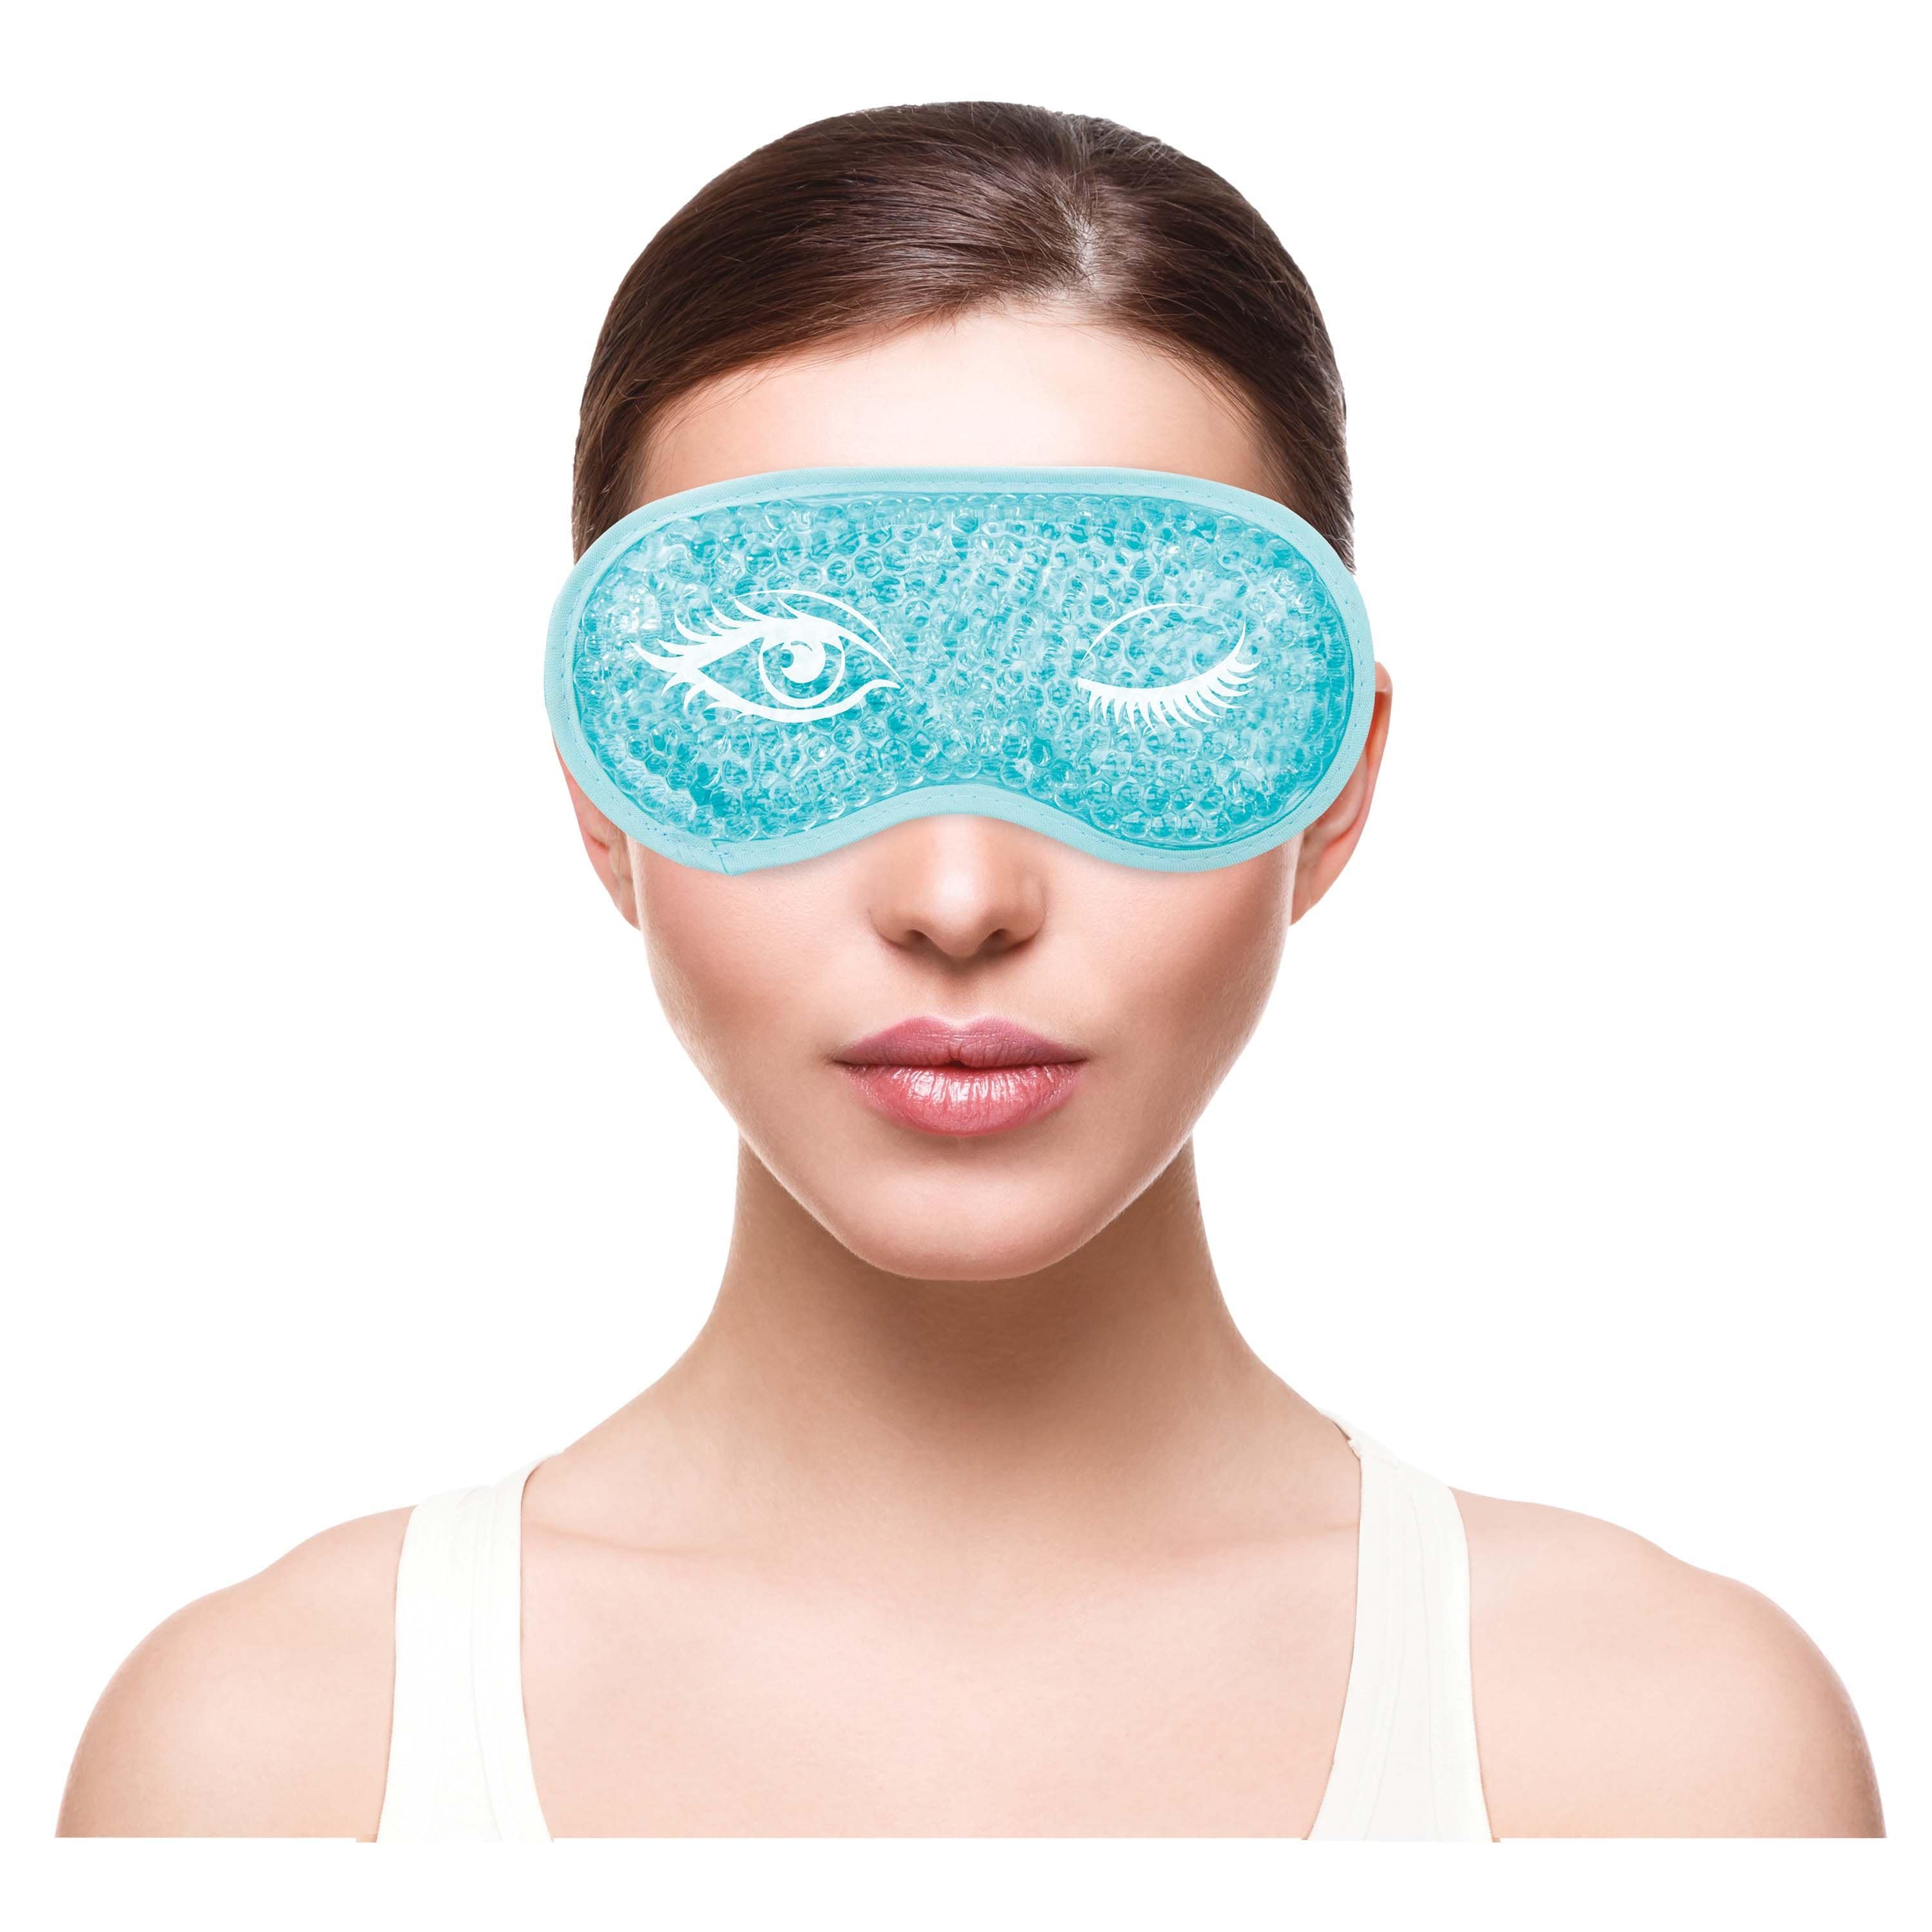 Is Gift Girls Accessory Blue Bliss Eye Mask